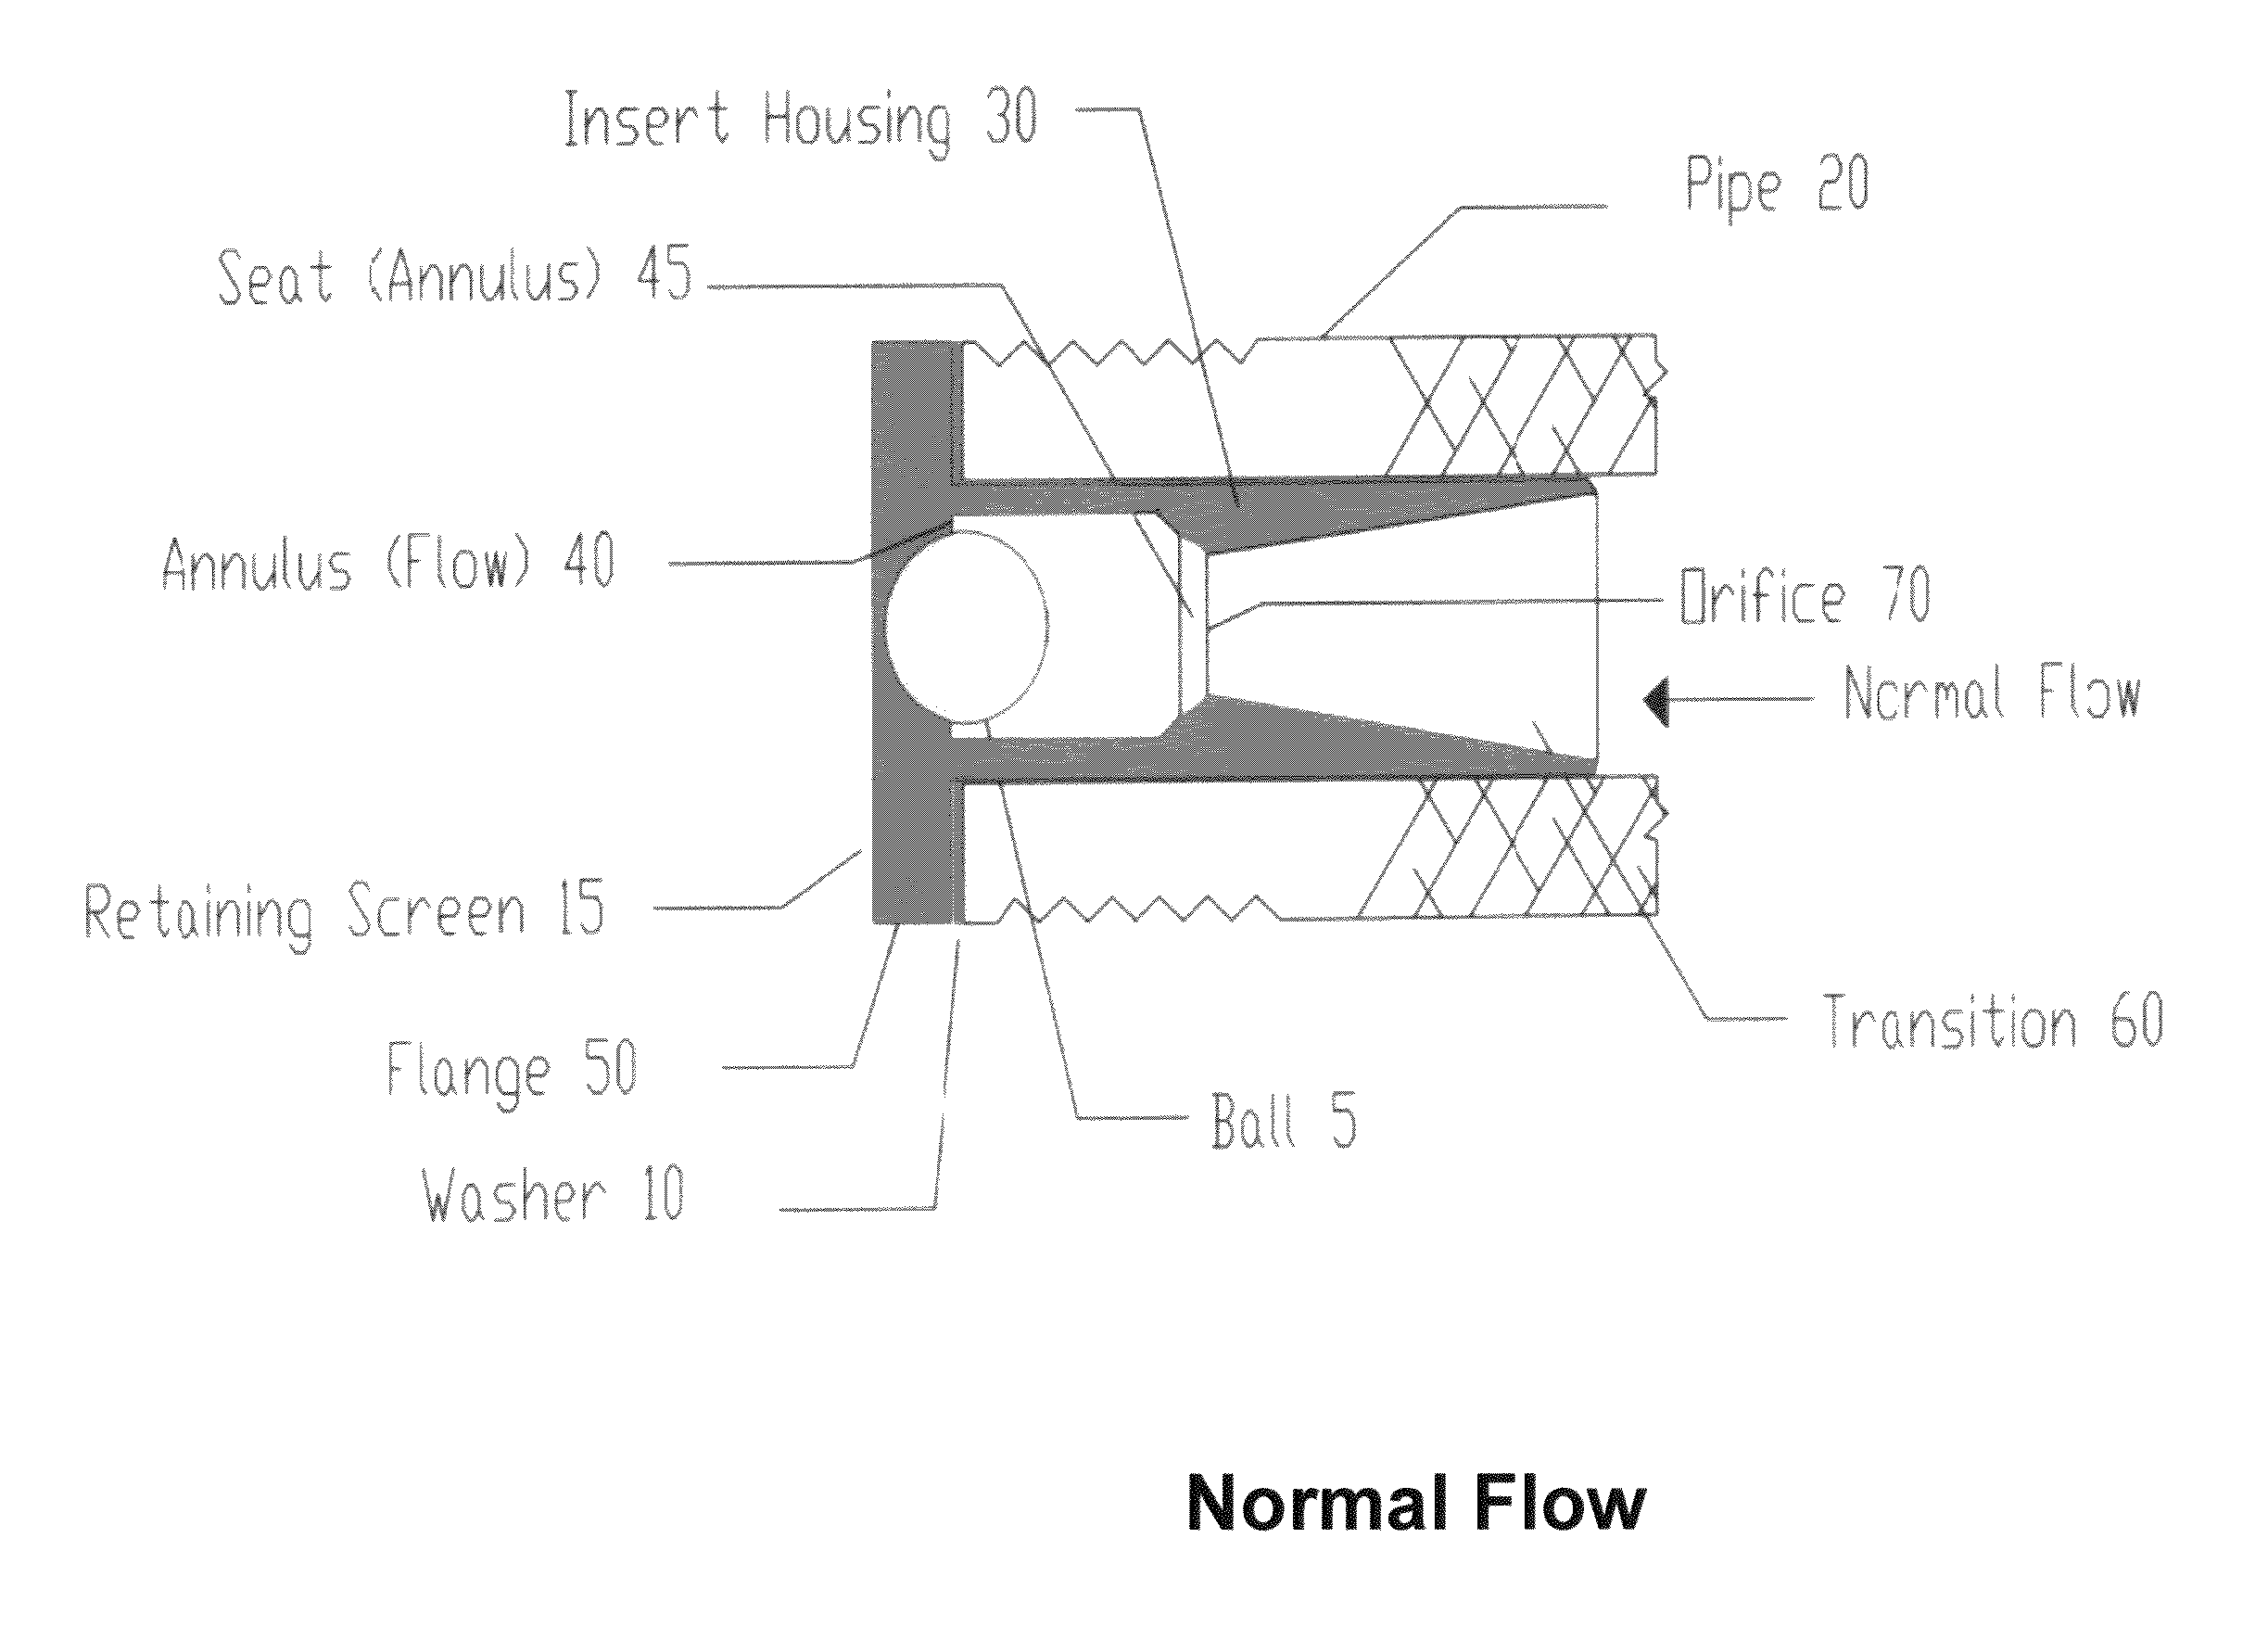 Backflow preventer valve